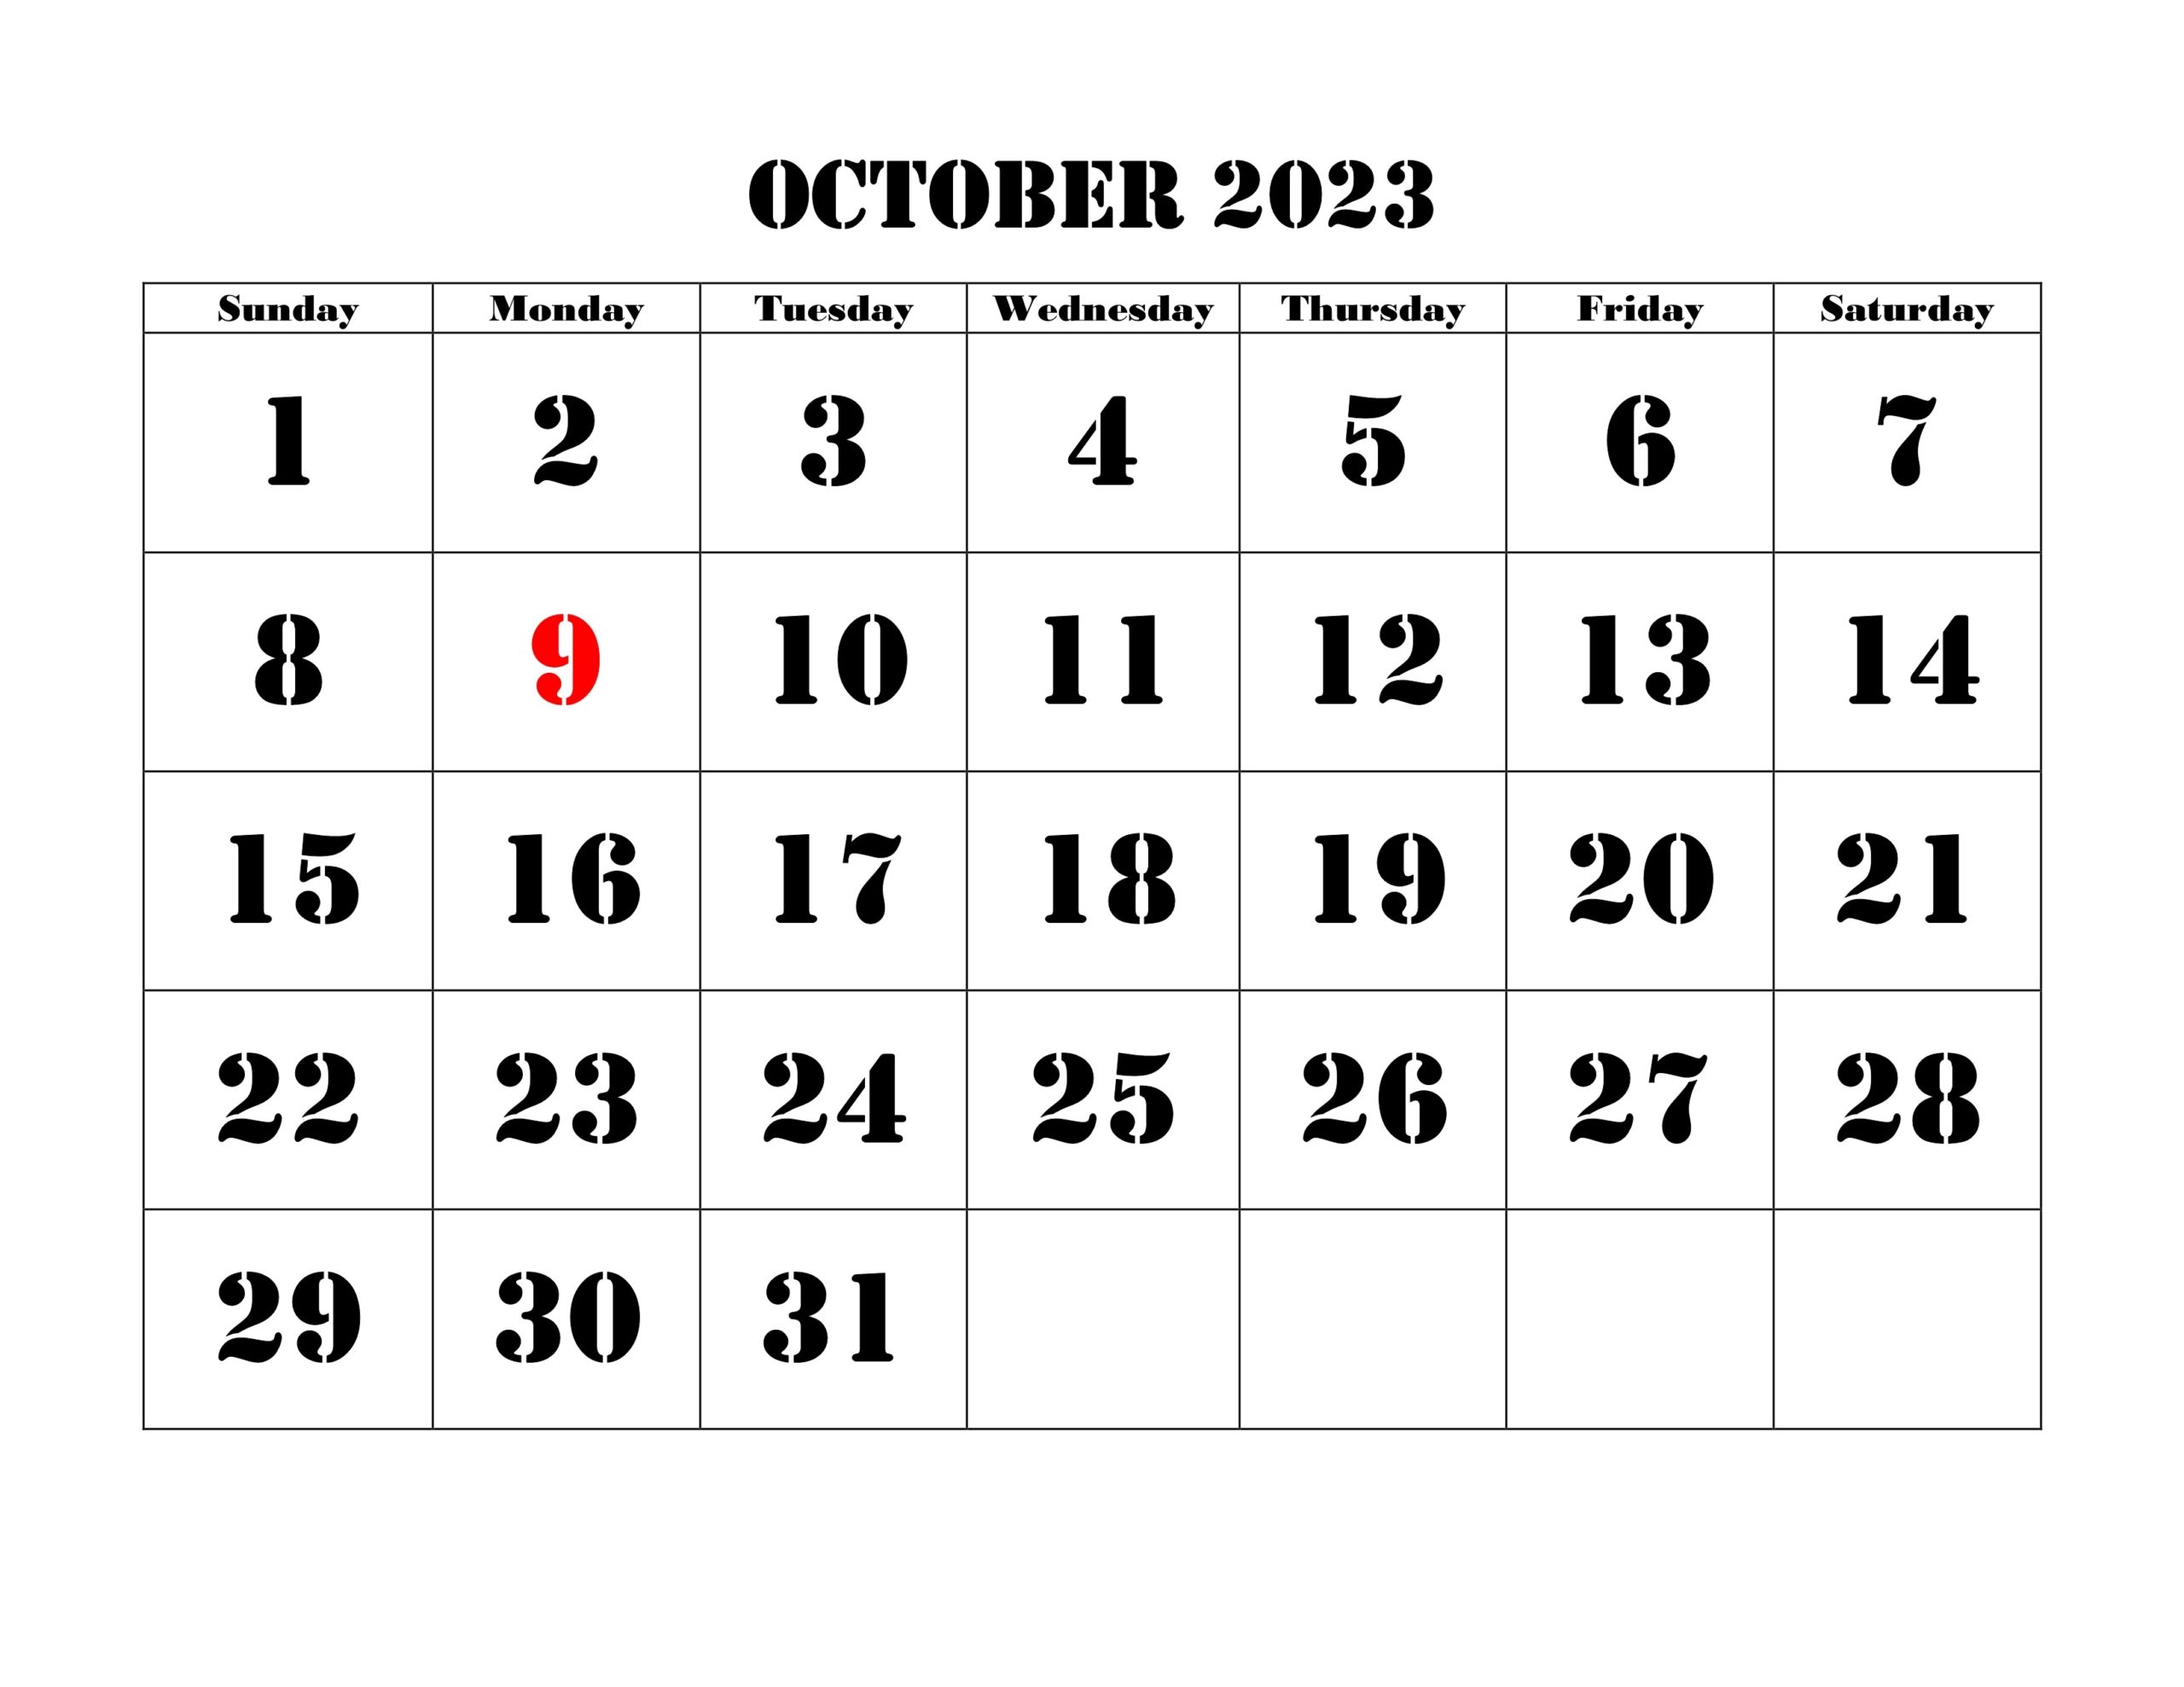 October 2023 Calendar with Holidays Templates